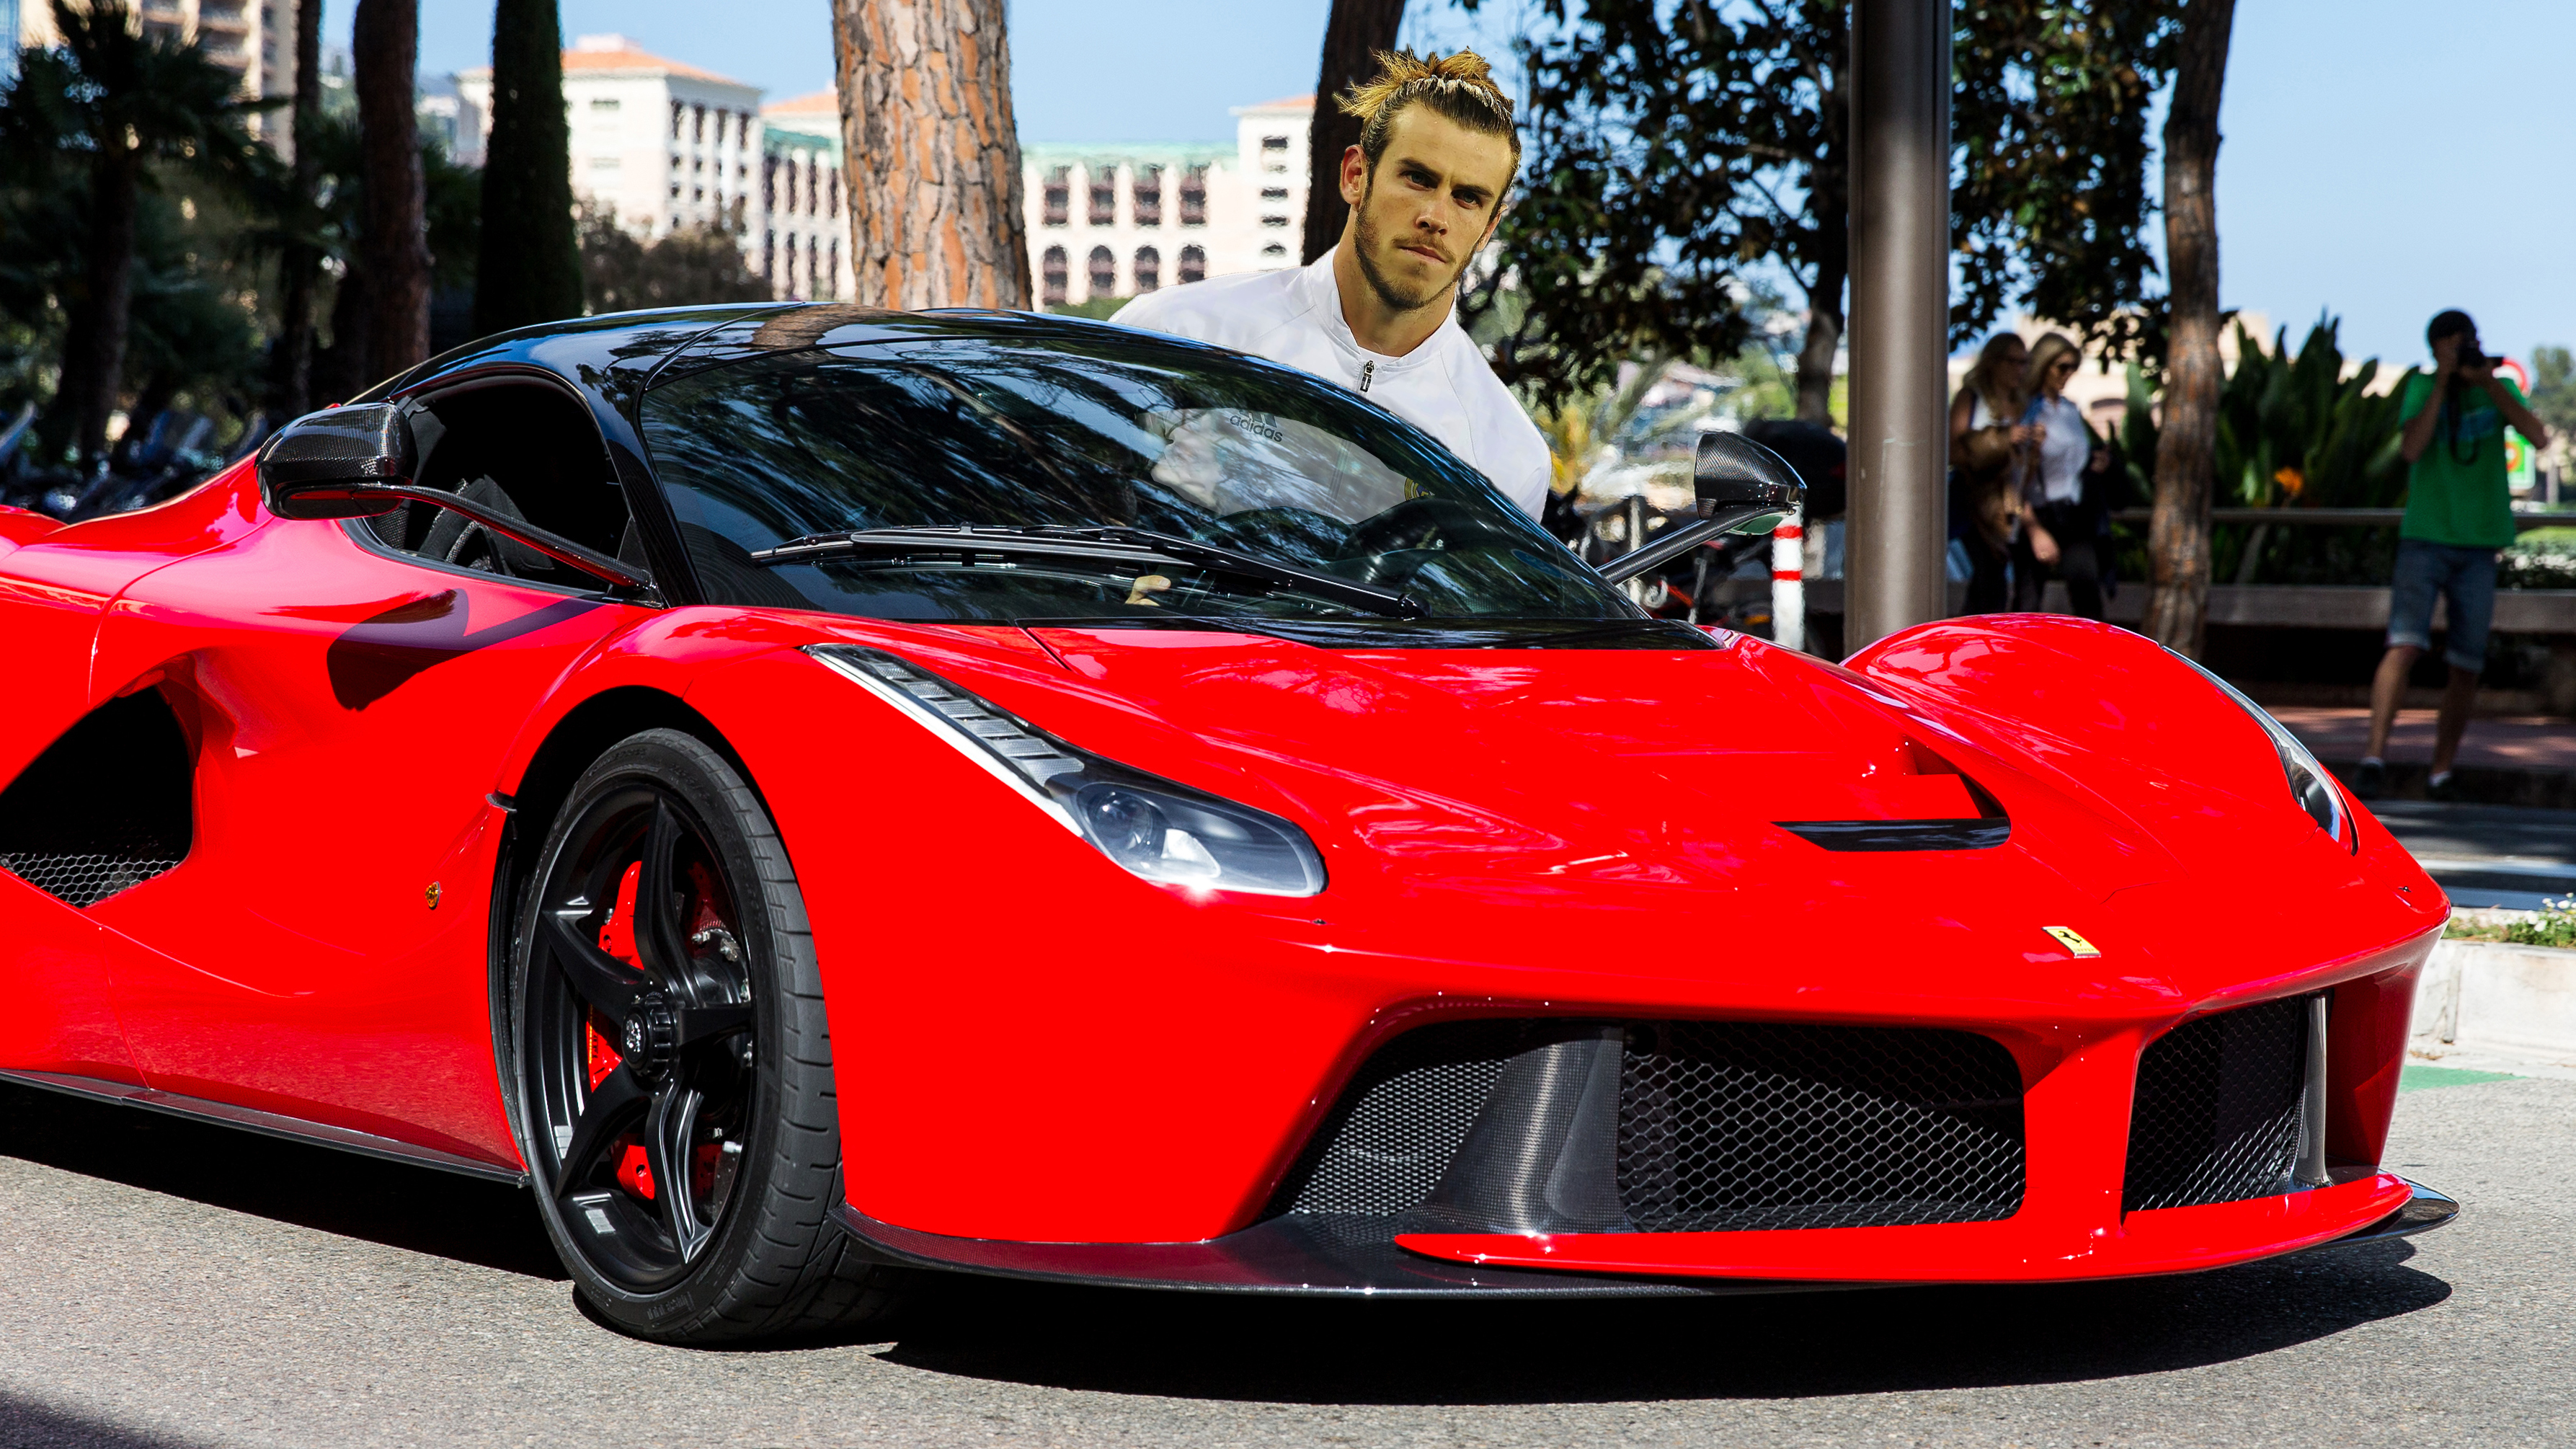 Bale and a Ferrari